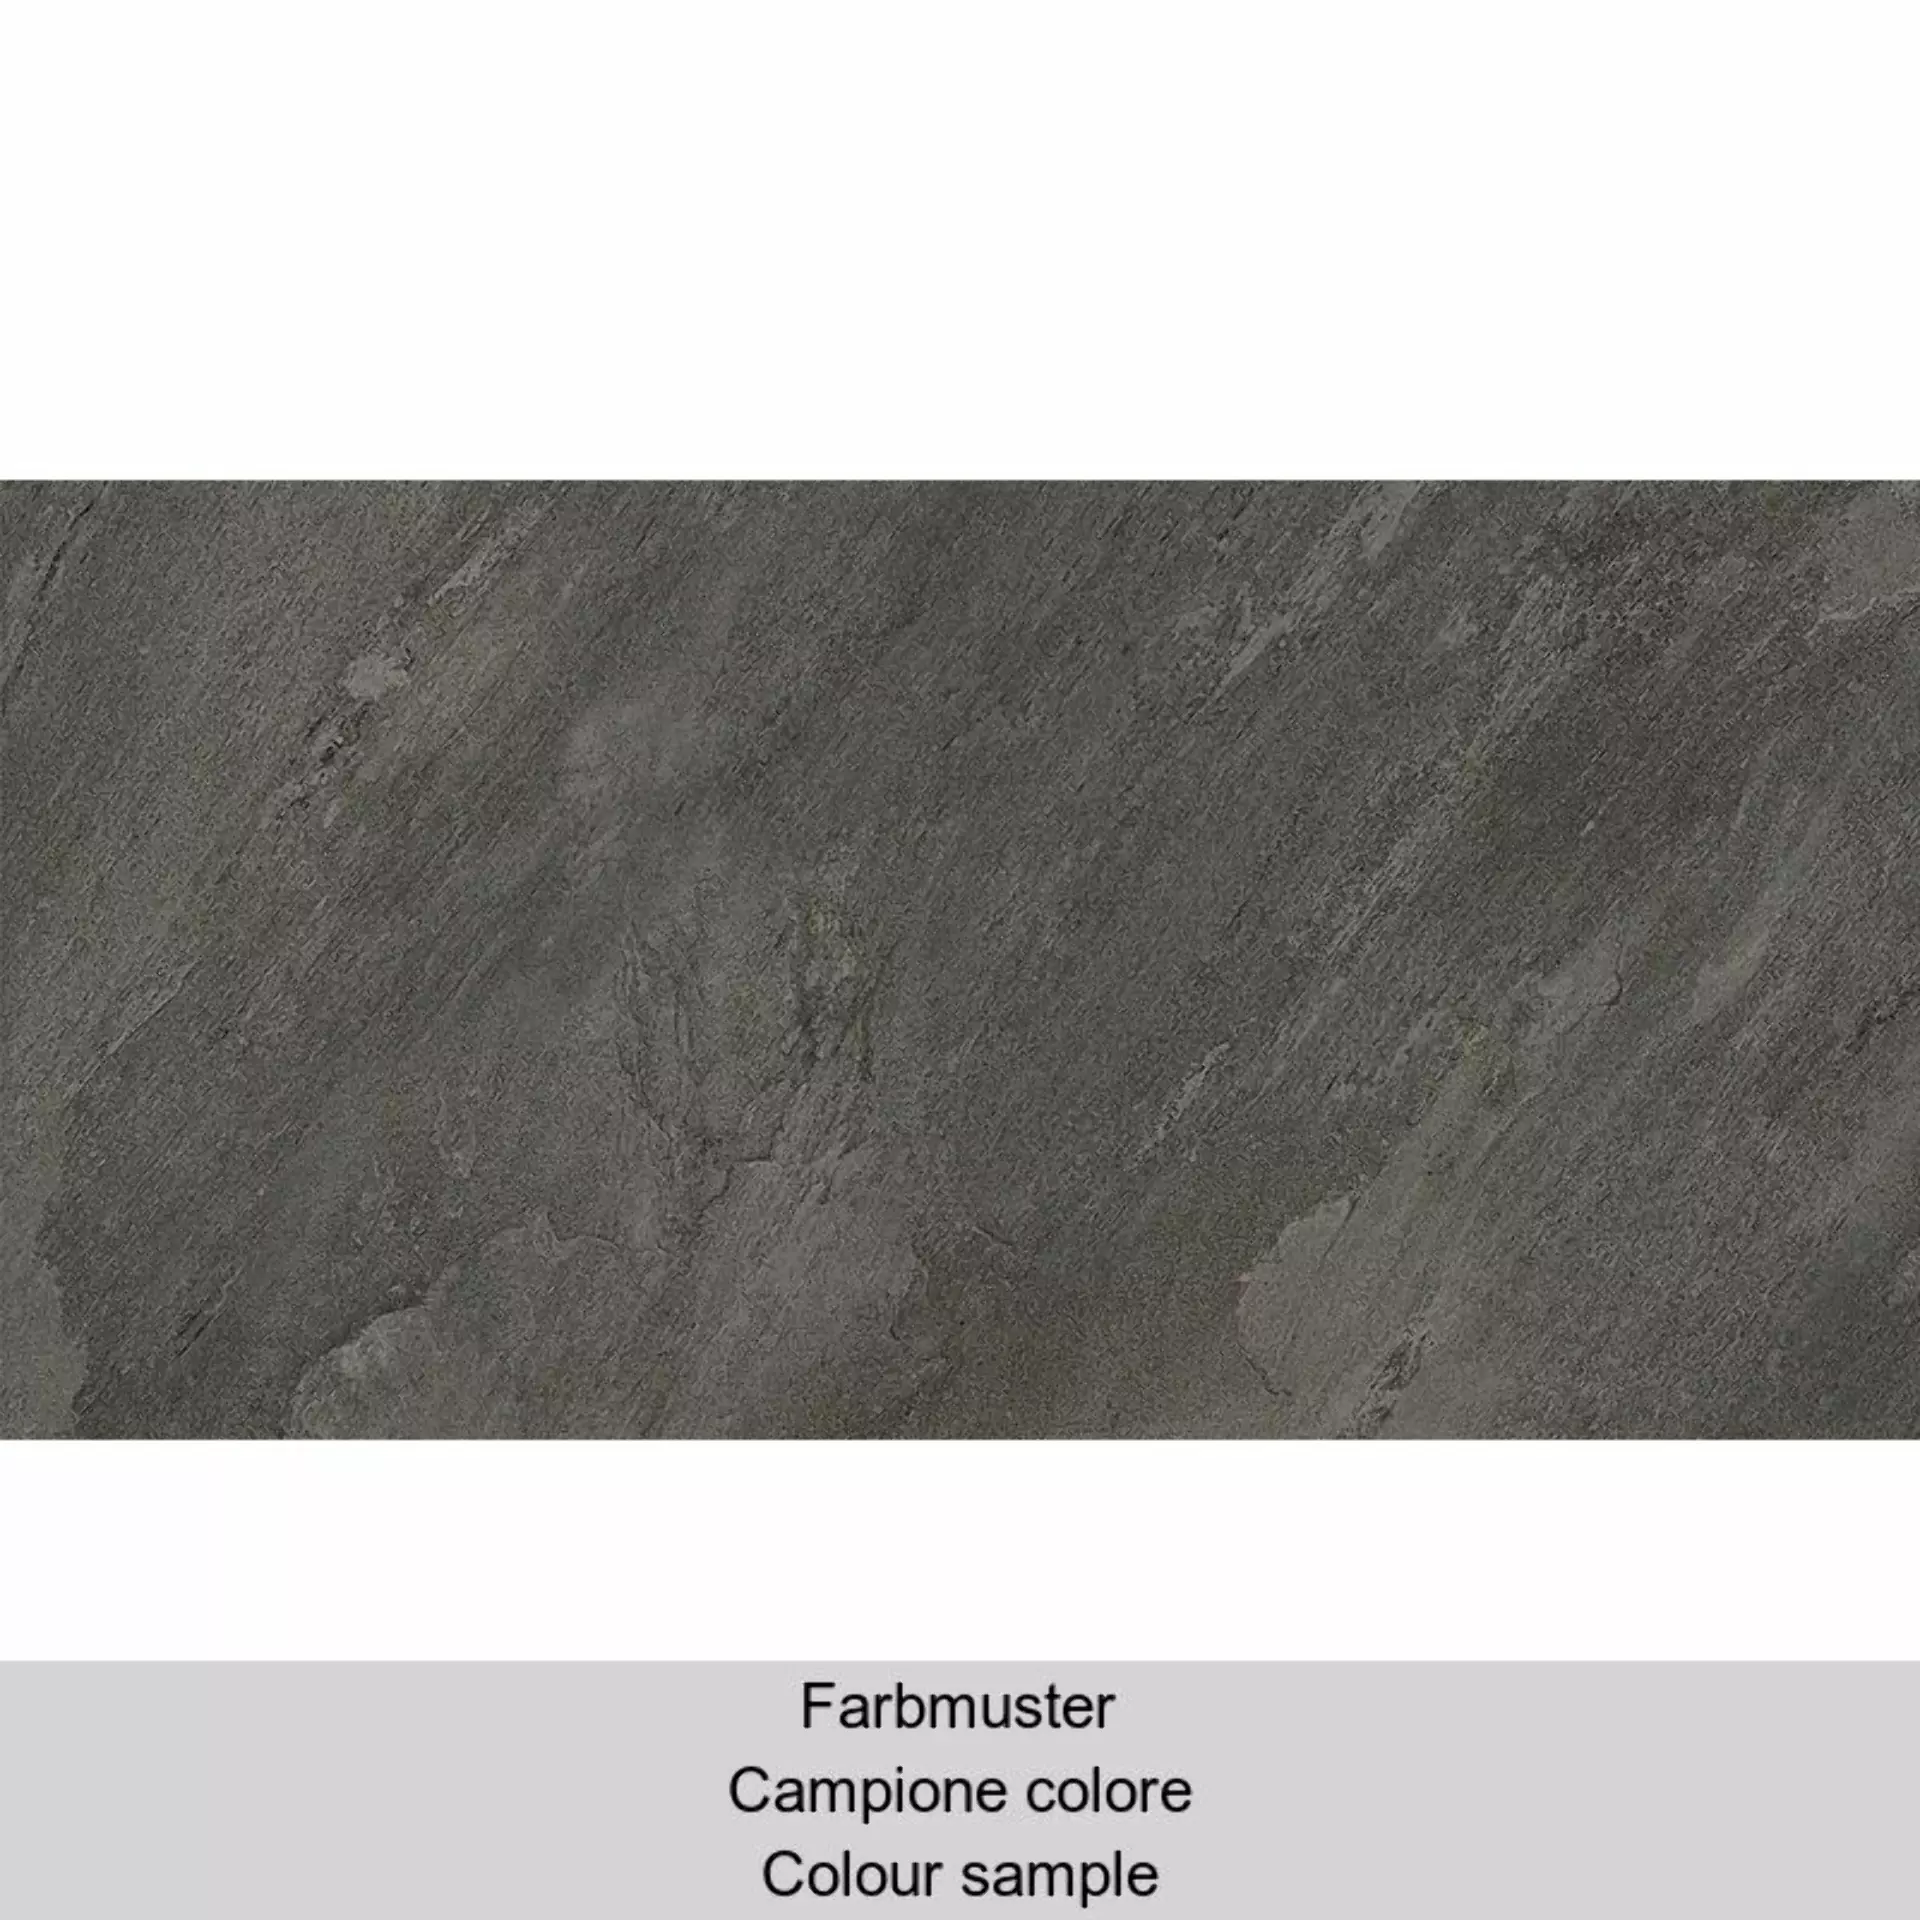 Century Stonerock Black Stone Two – Grip 0119804 50x100cm rectified 20mm